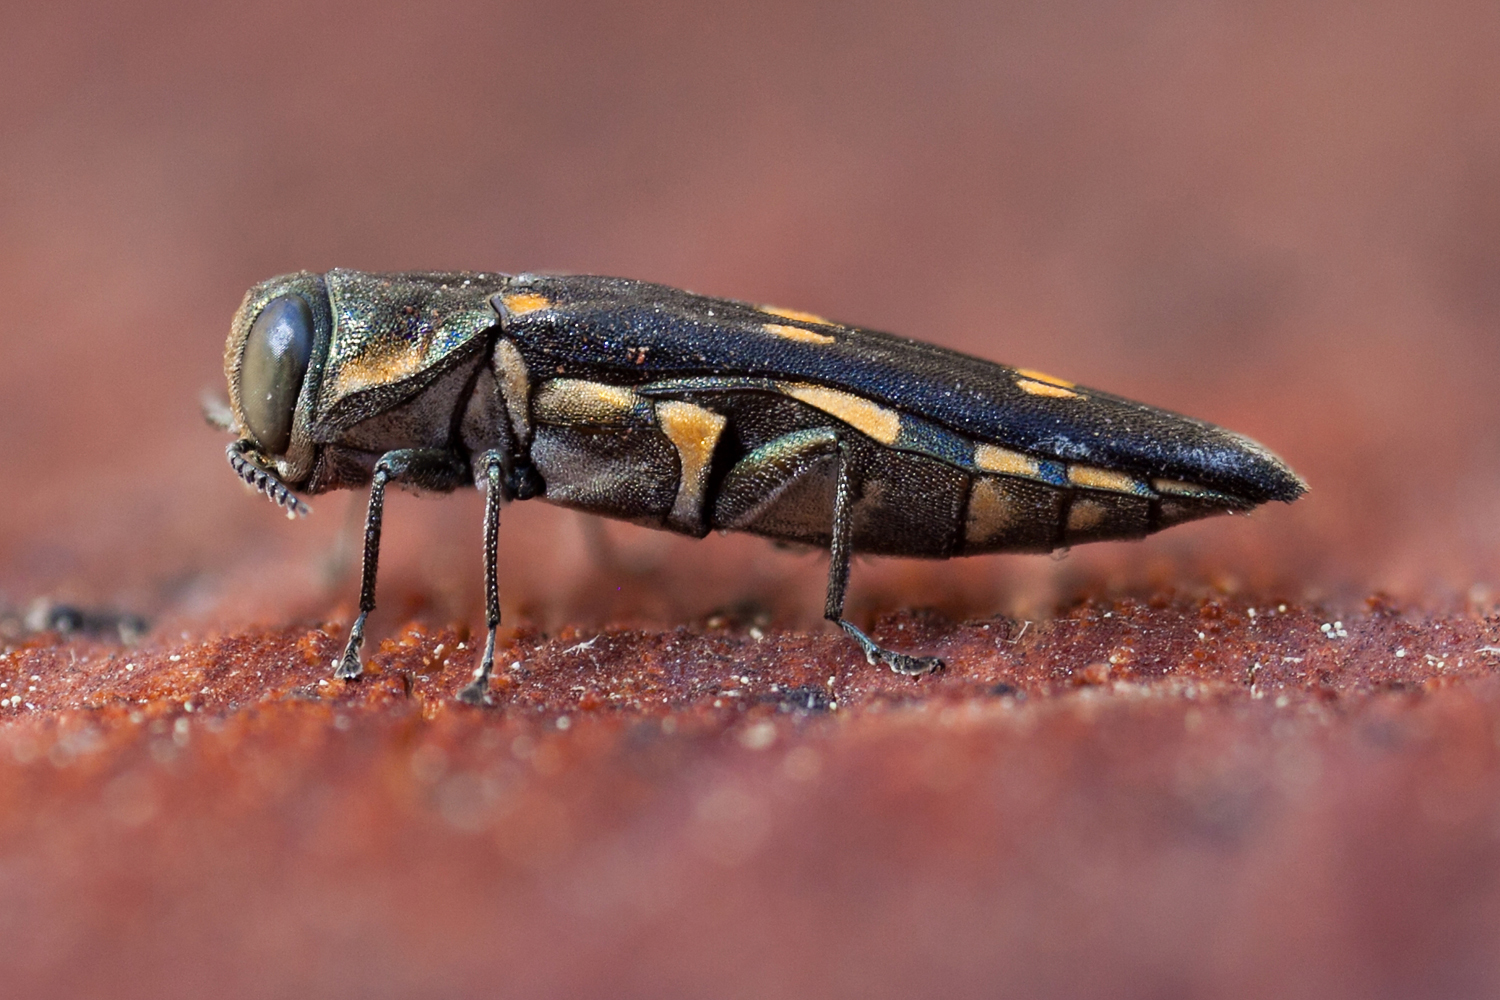 Agrilus coxalis, a pepper-piercing true bug